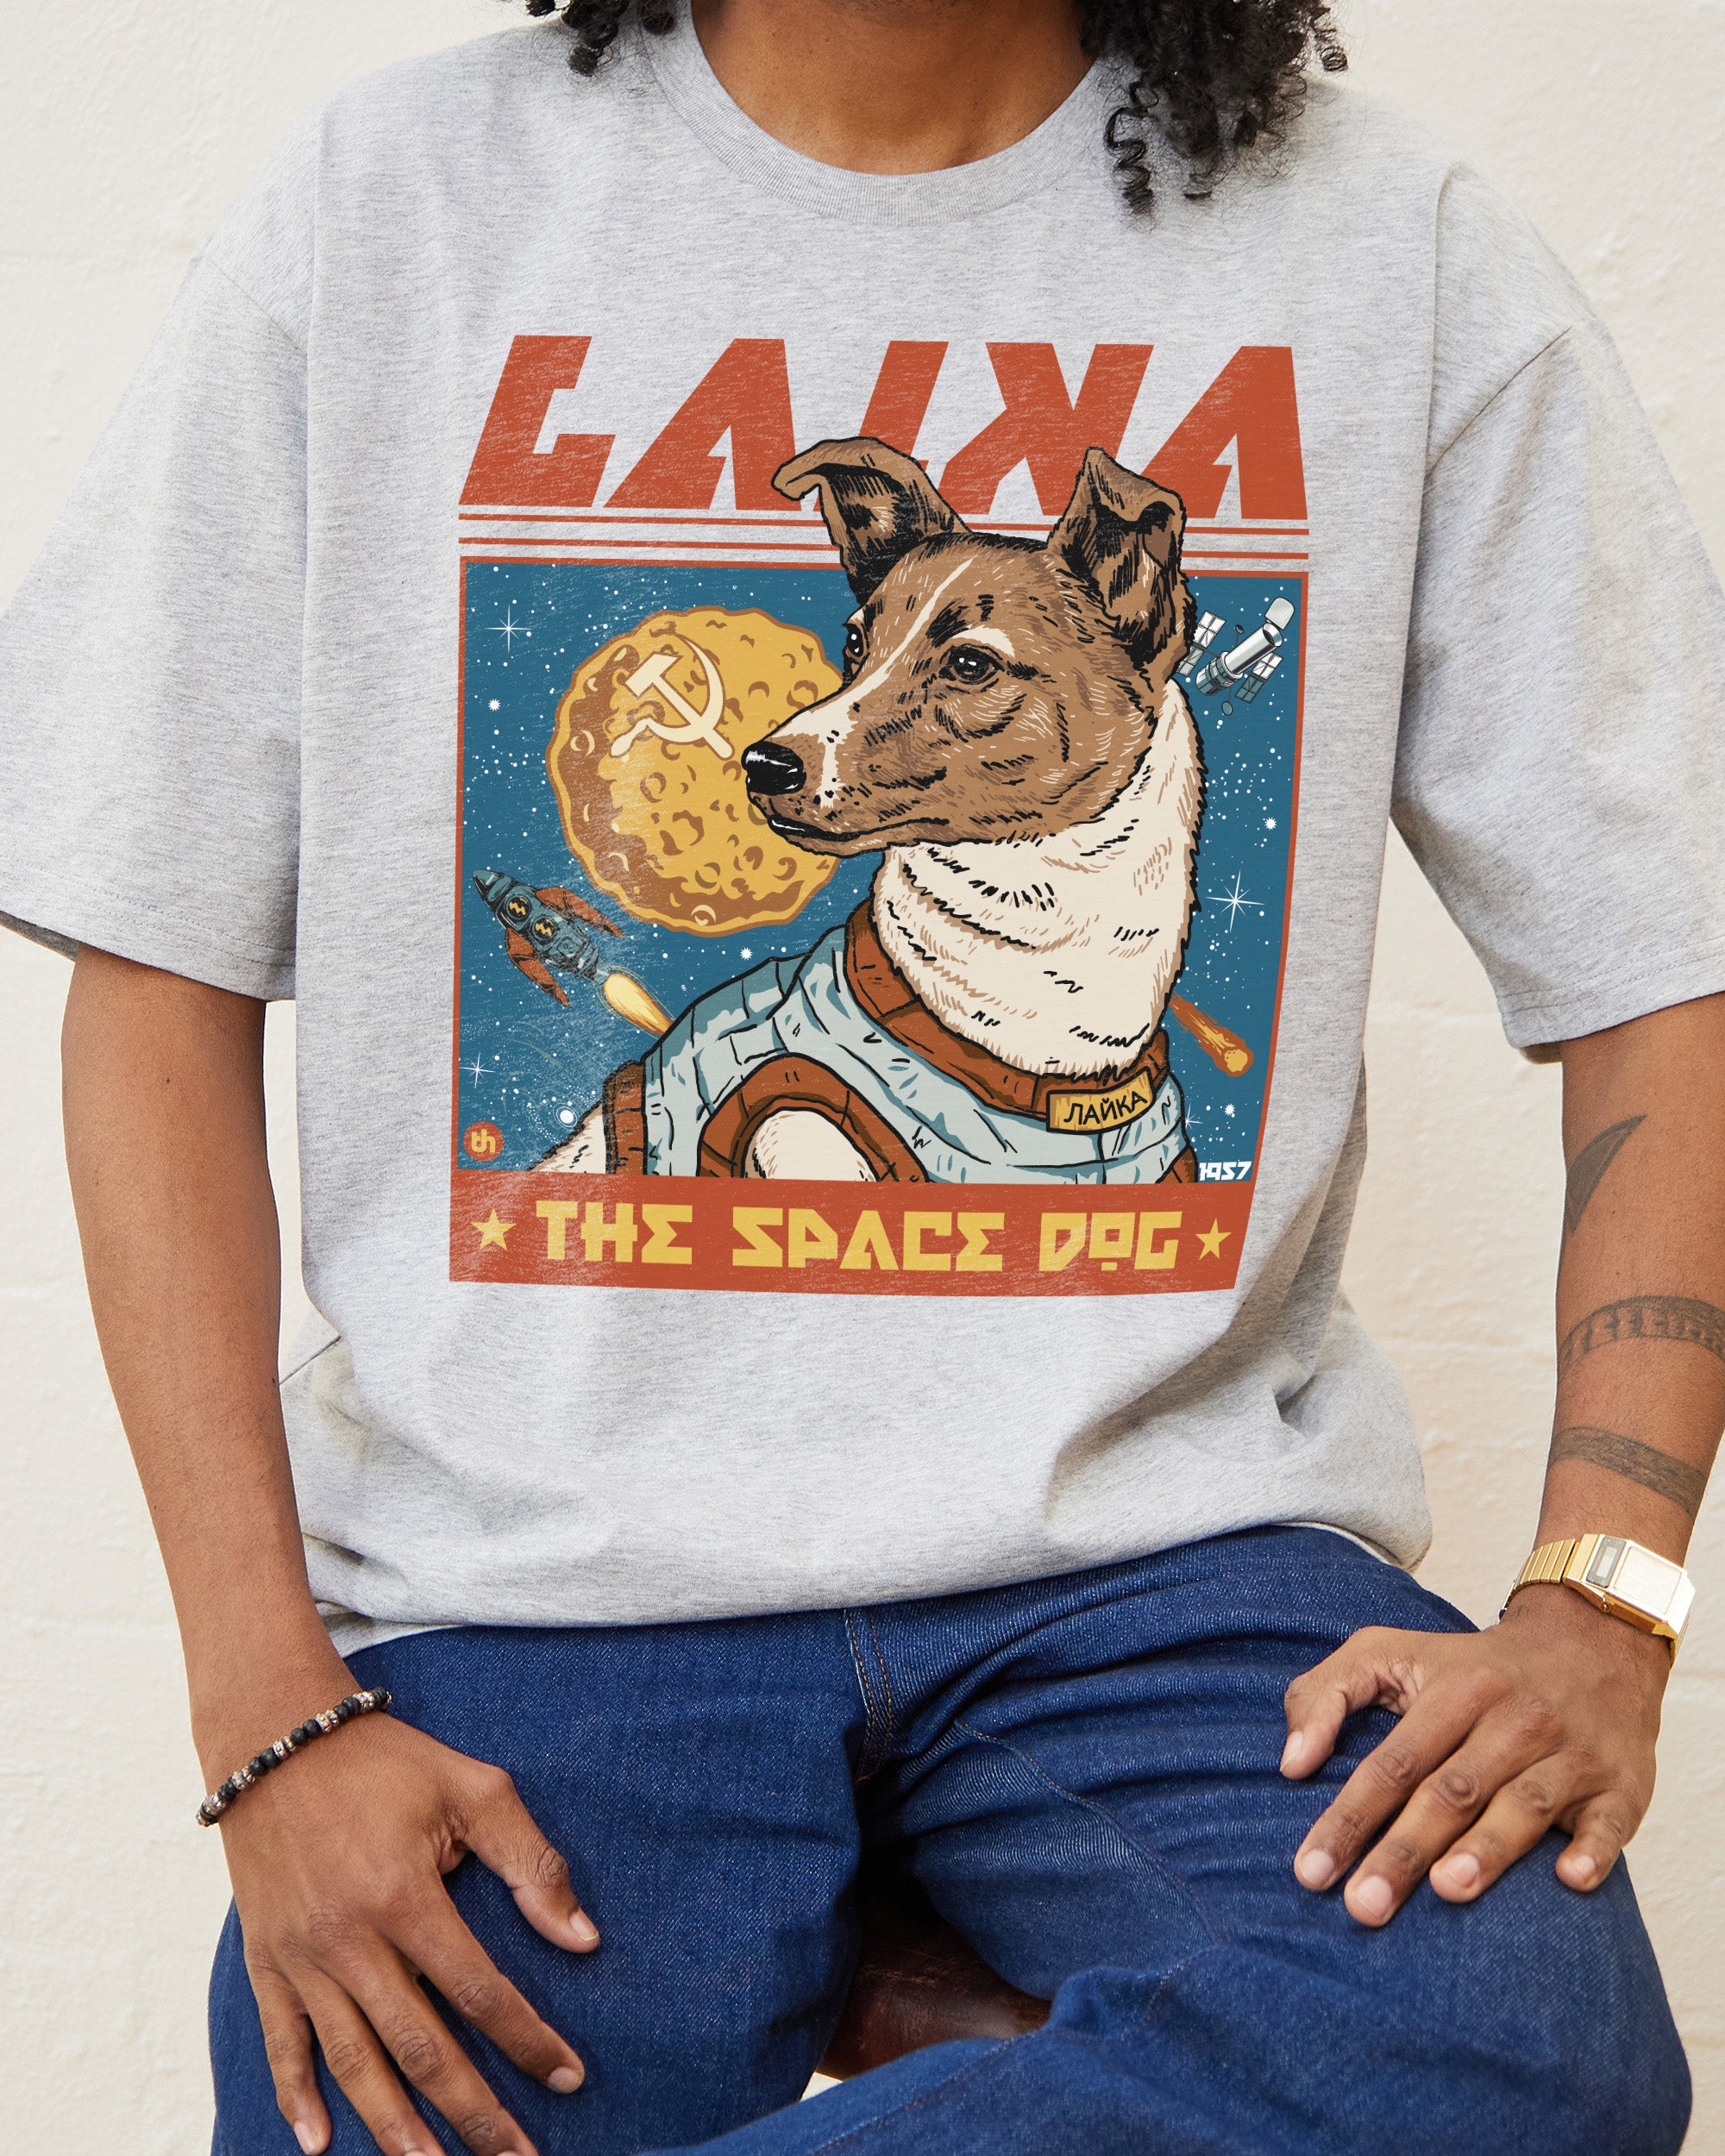 Laika the Space Dog T-Shirt Australia Online